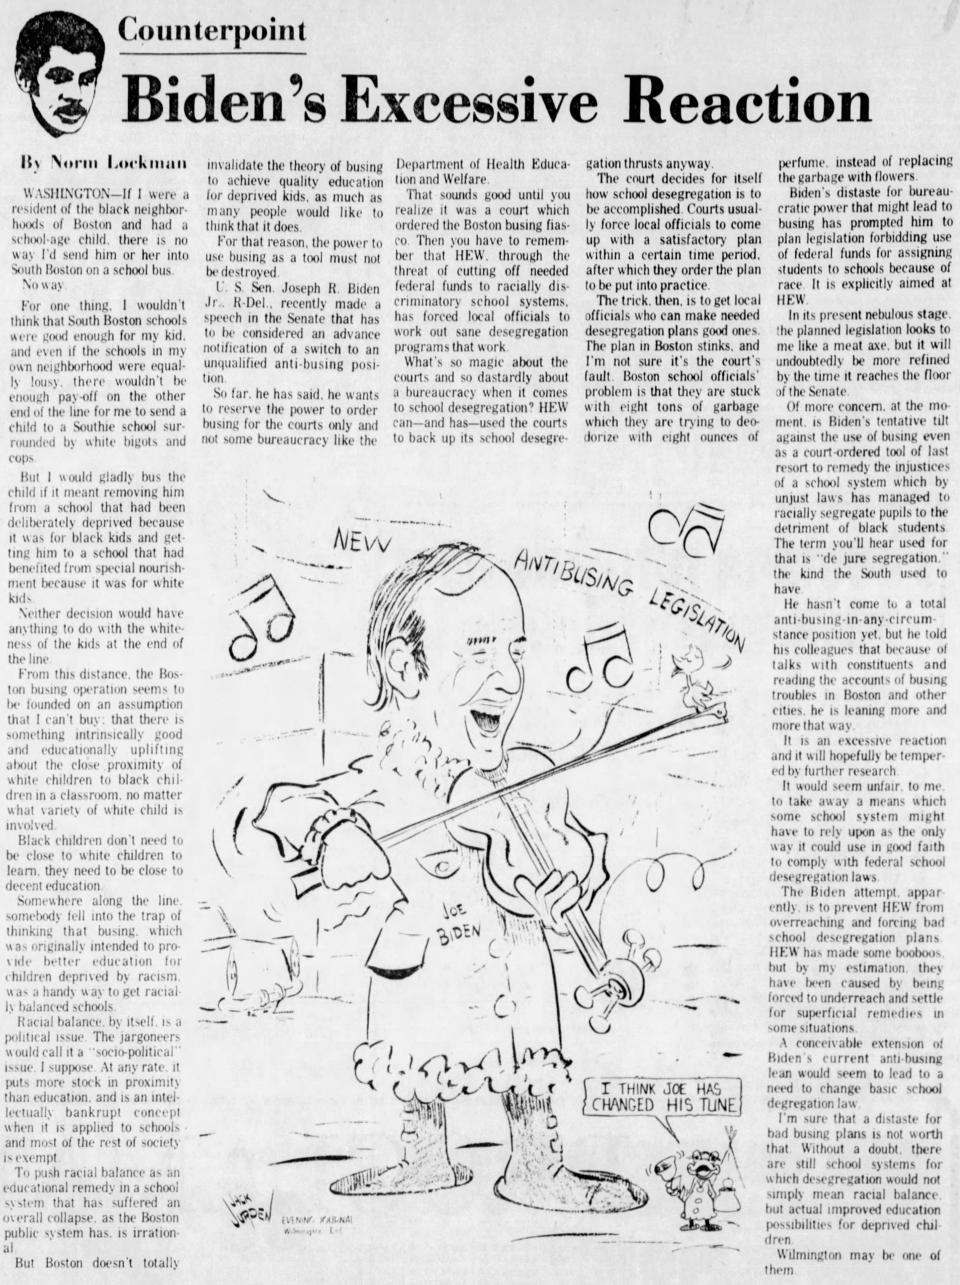 News Journal journalist reacts to Biden's hardening stance against busing for school desegregation, on December 19, 1974